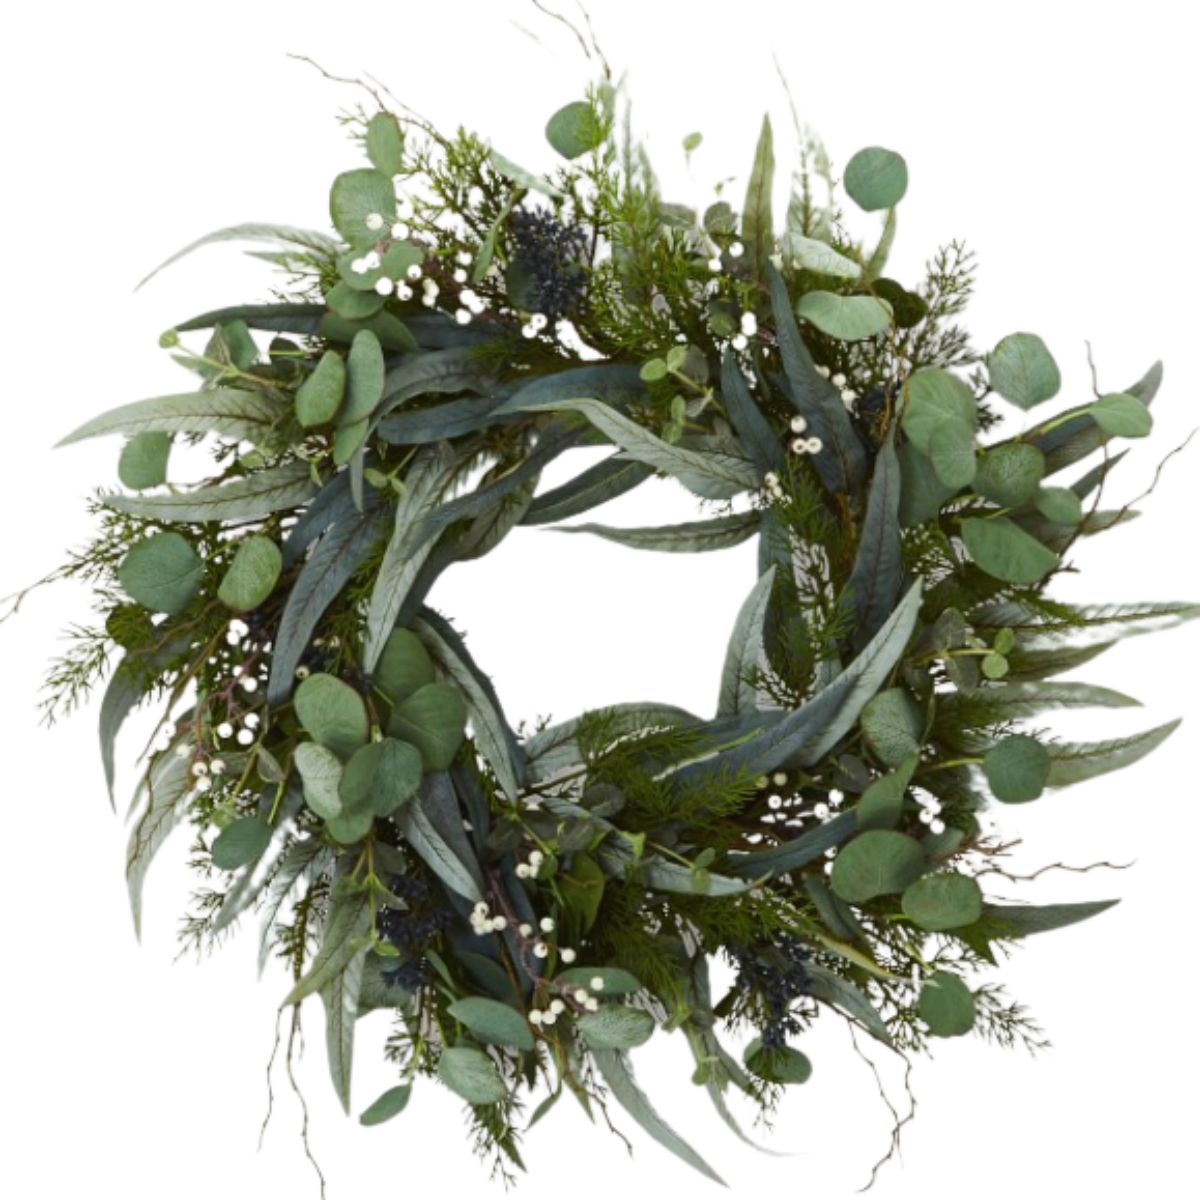 Eucalyptus & Mixed Greens Wreath from williams sonoma